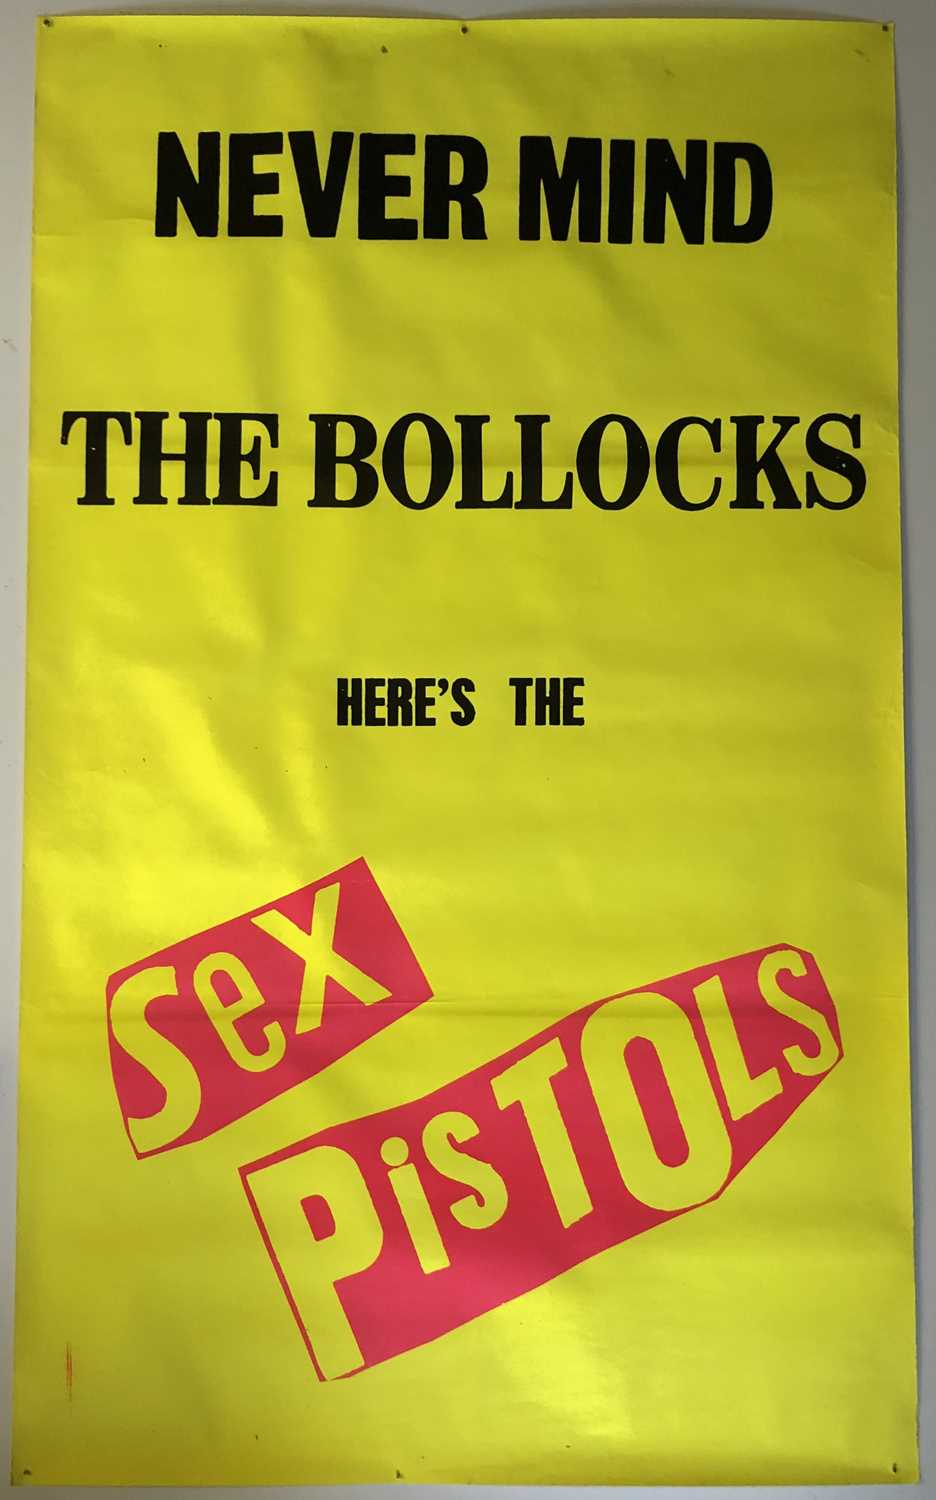 Lot 359 Sex Pistols Never Mind The Bollocks Here S